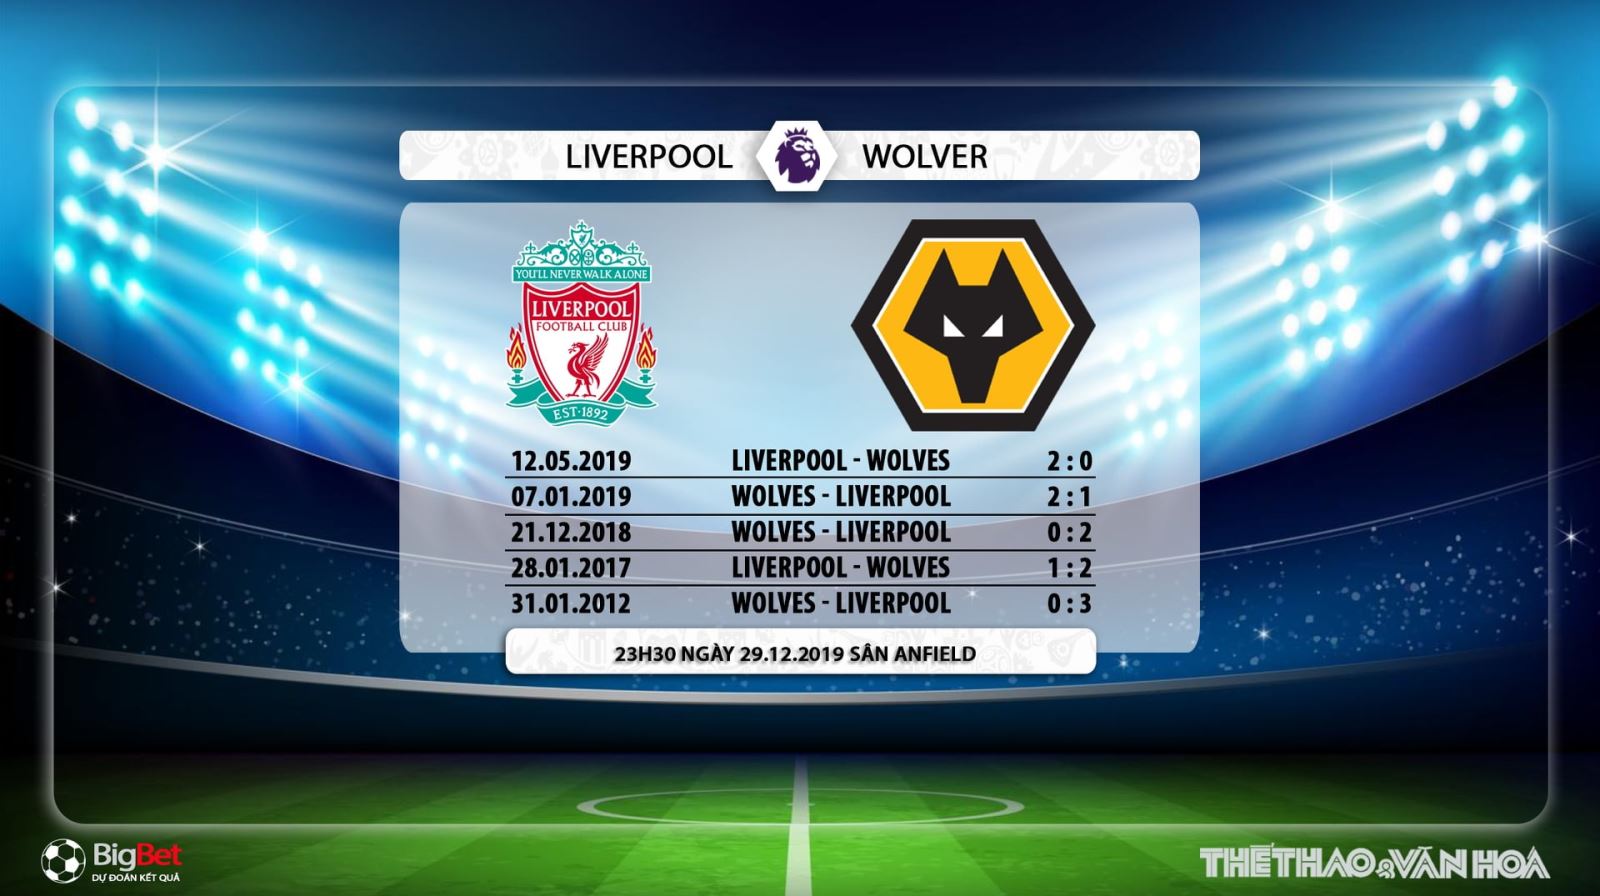 Liverpool vs Wolves, trực tiếp Liverpool vs Wolves, bóng đá, bong da, liverpool, wolves, soi kèo Liverpool vs Wolves, K+, K+PM